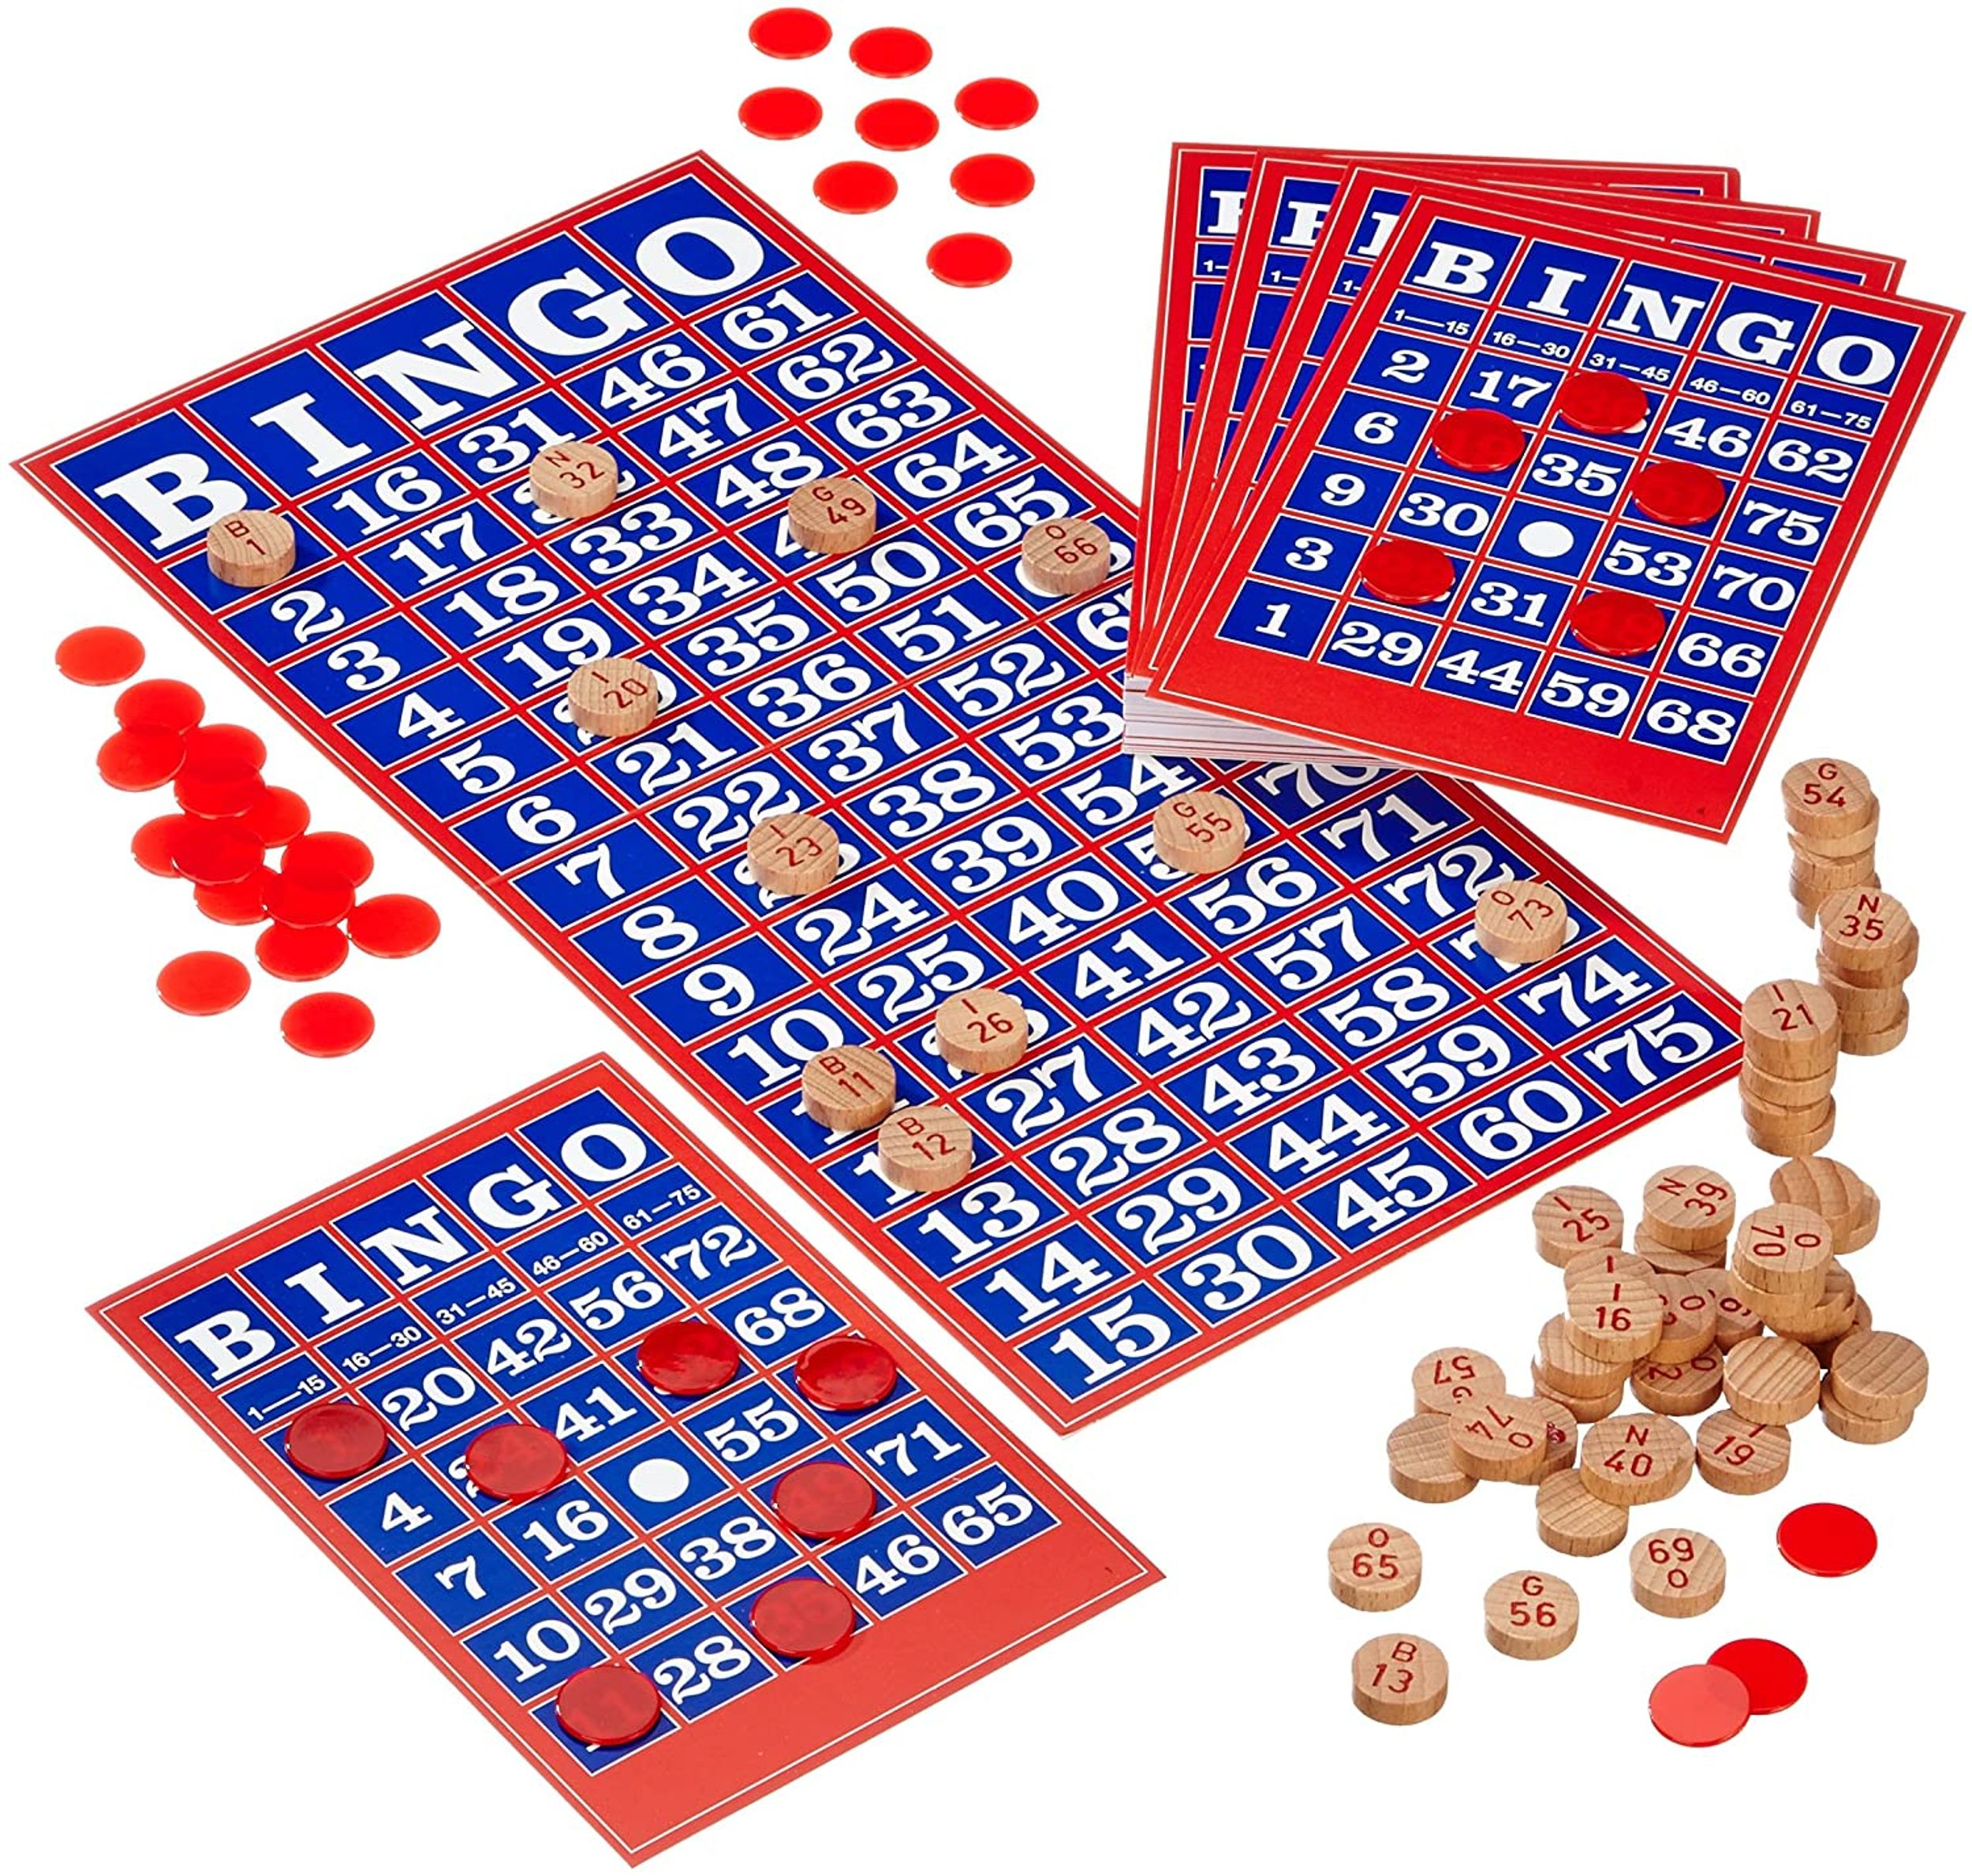 SPIELE Bingo SCHMIDT Gesellschaftsspiel